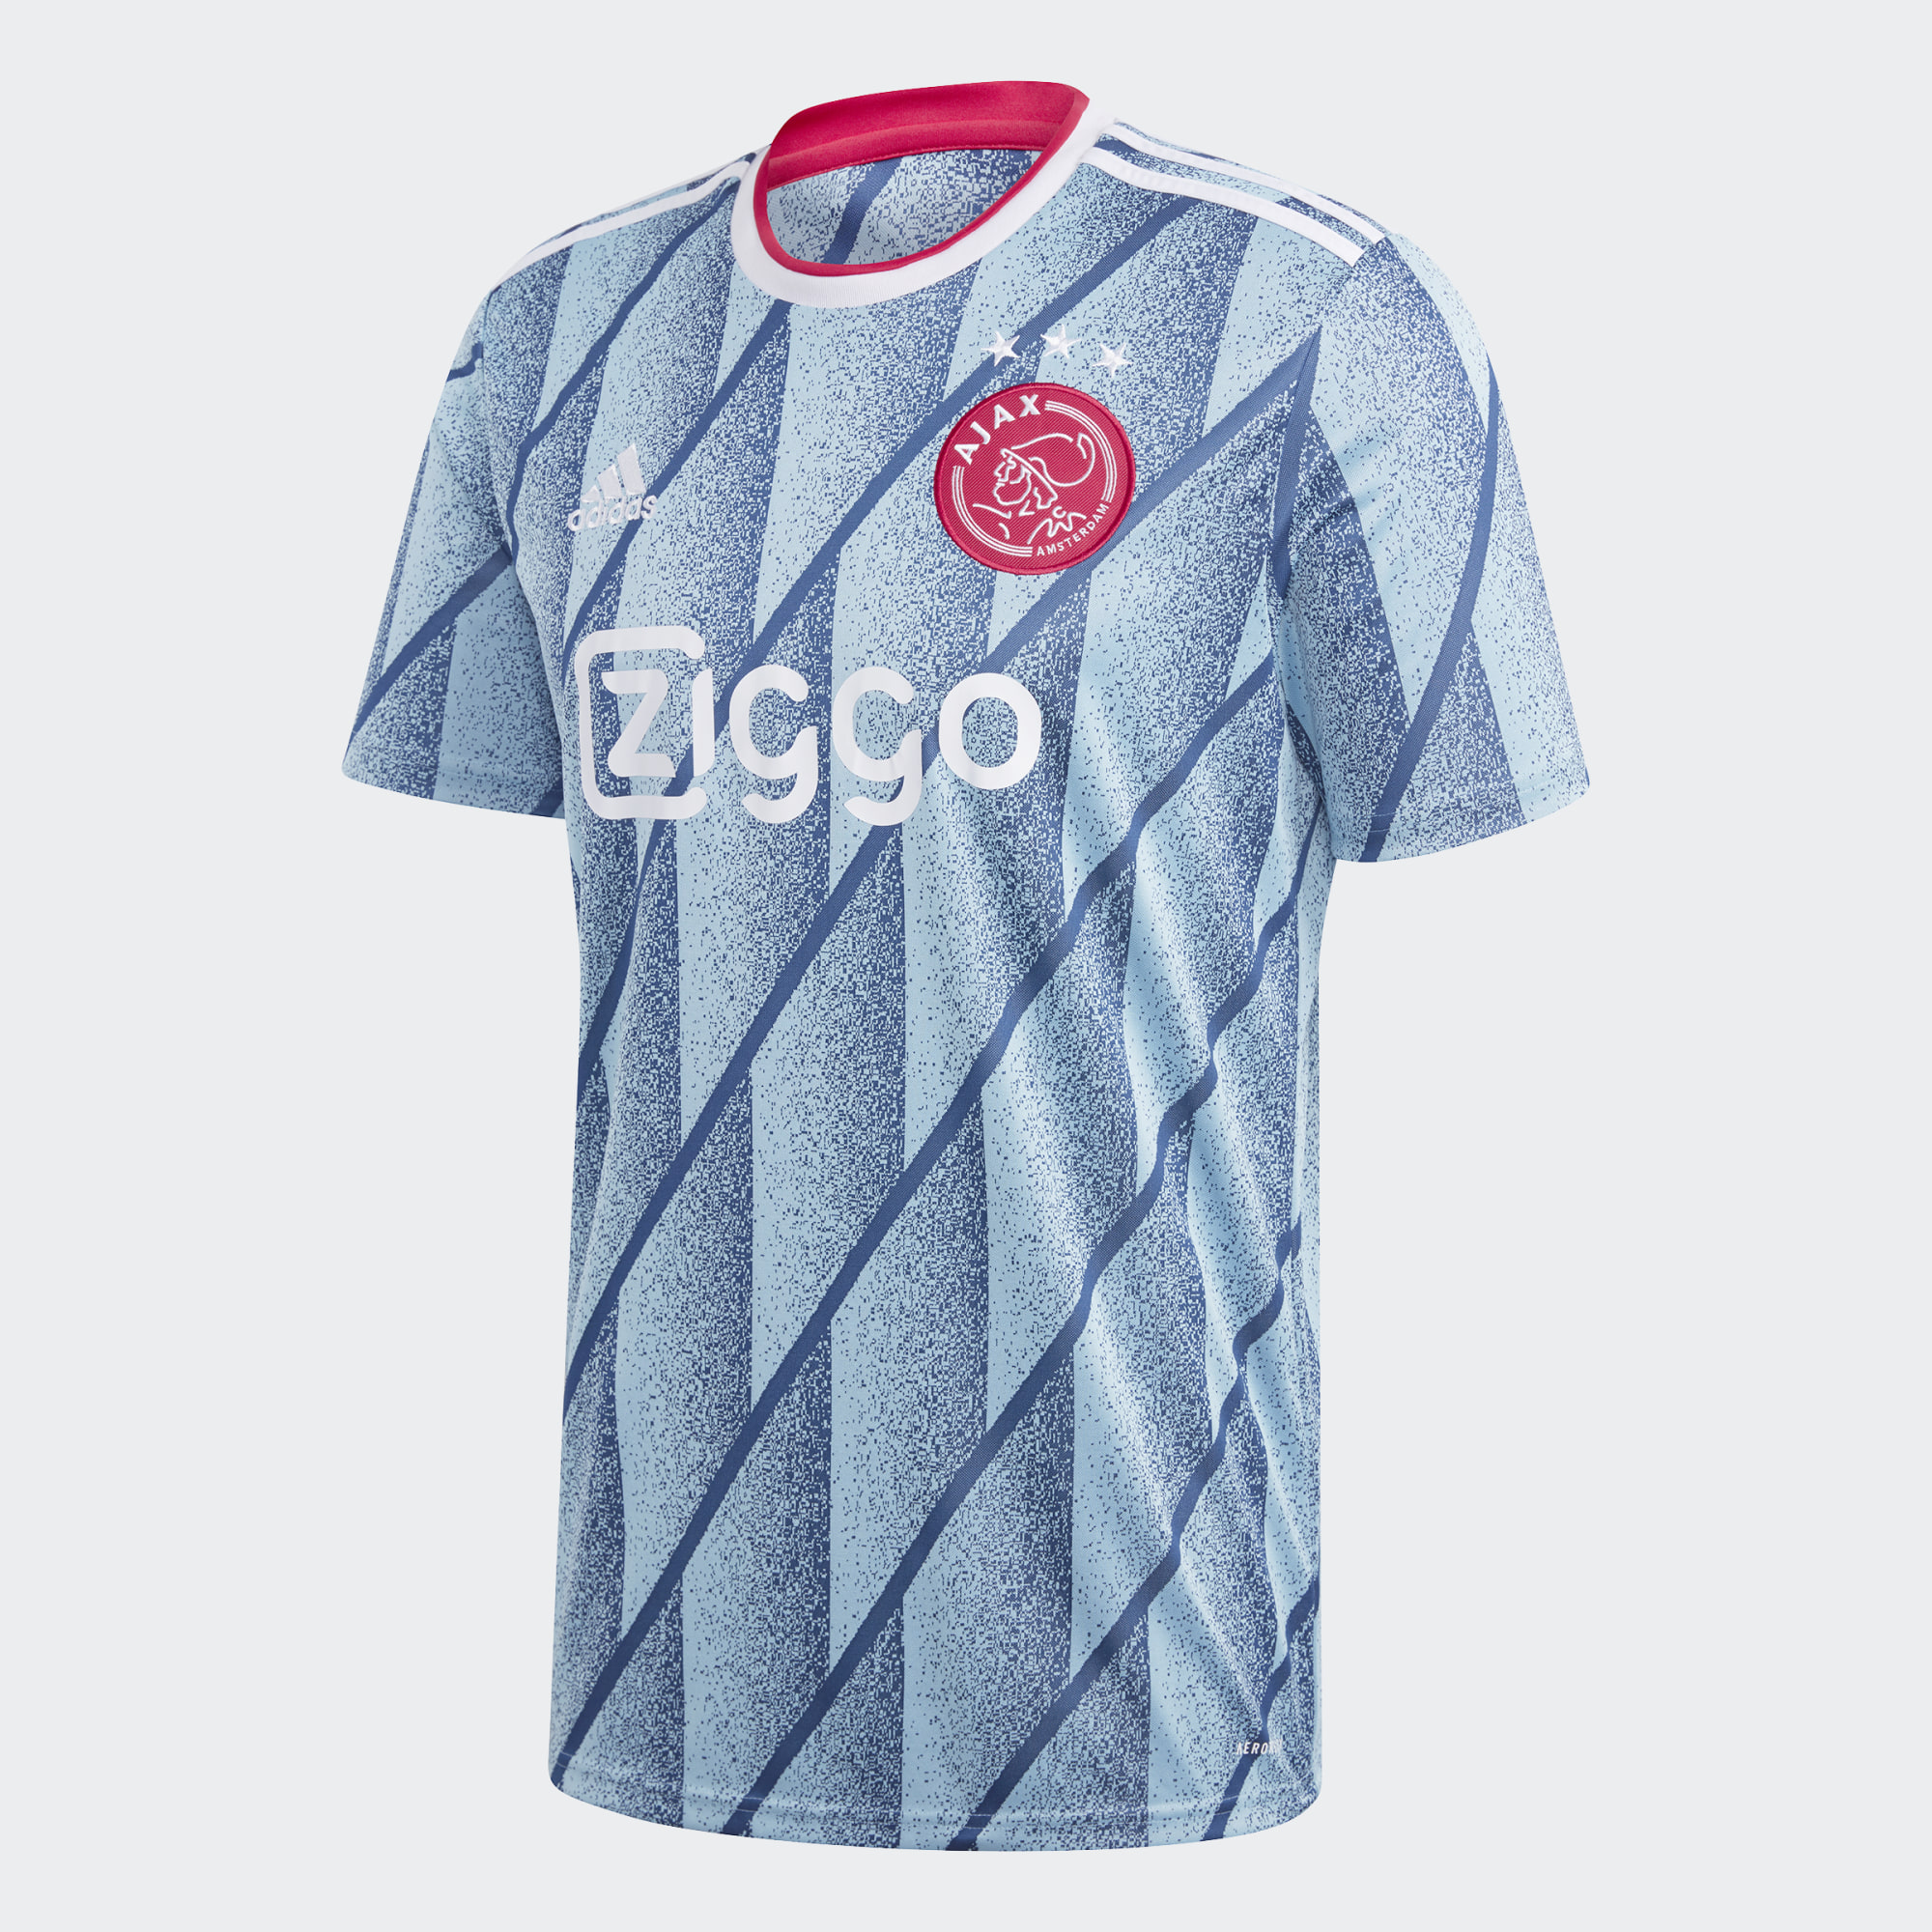 New Men's Ajax Home Football Shirt 2020/21 